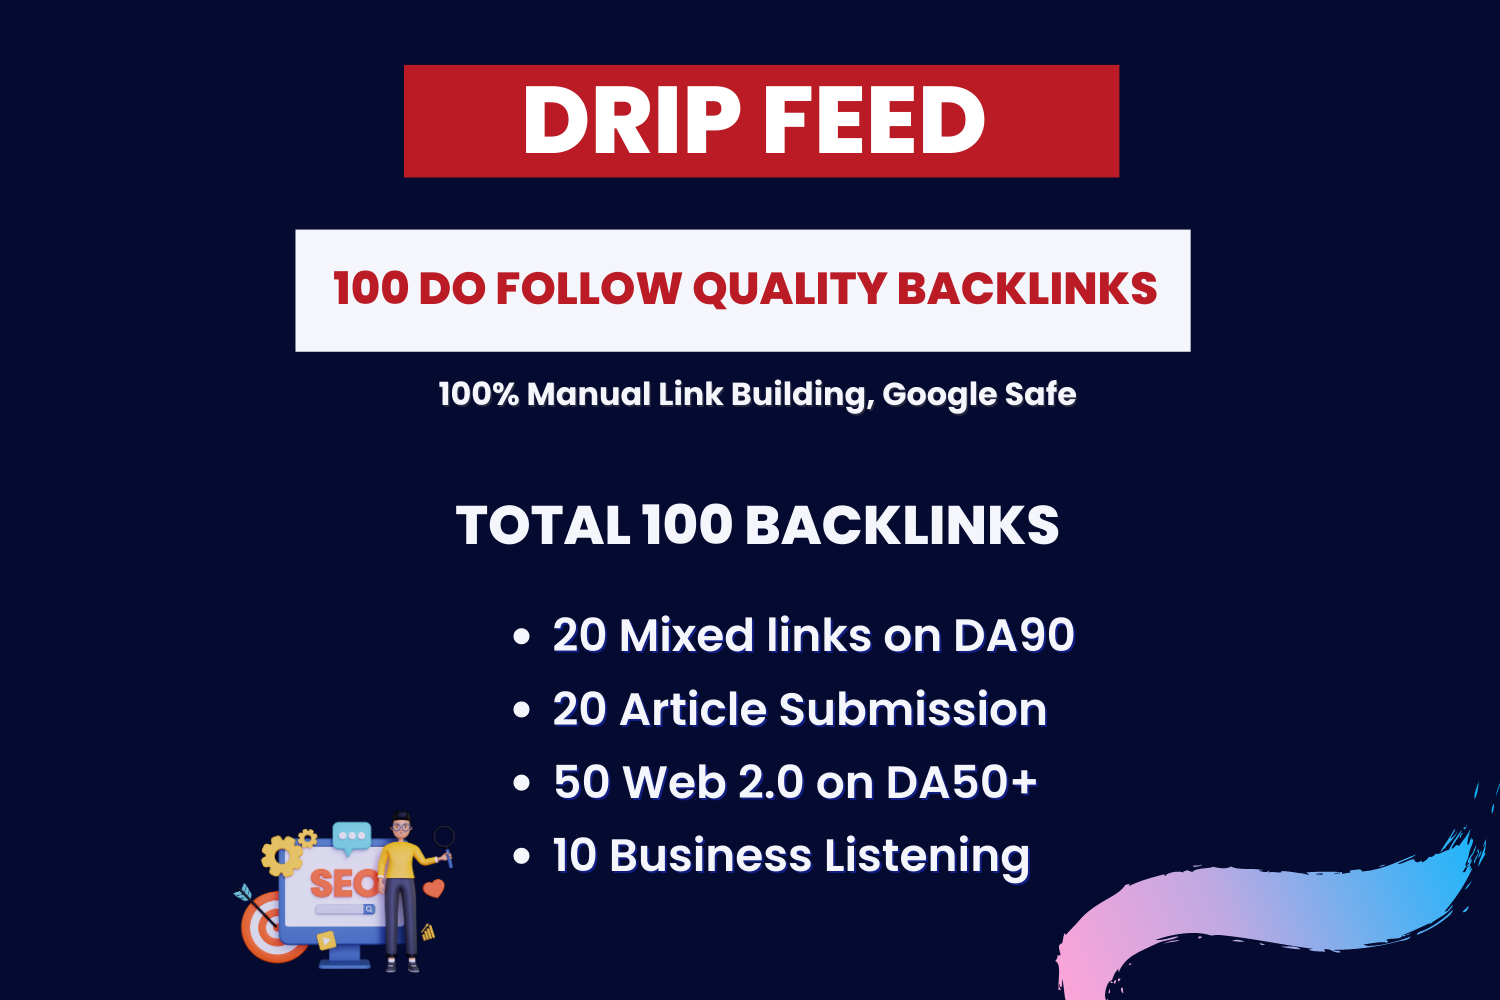 drip feed backlinks 100 seo high quality backlinks online buy